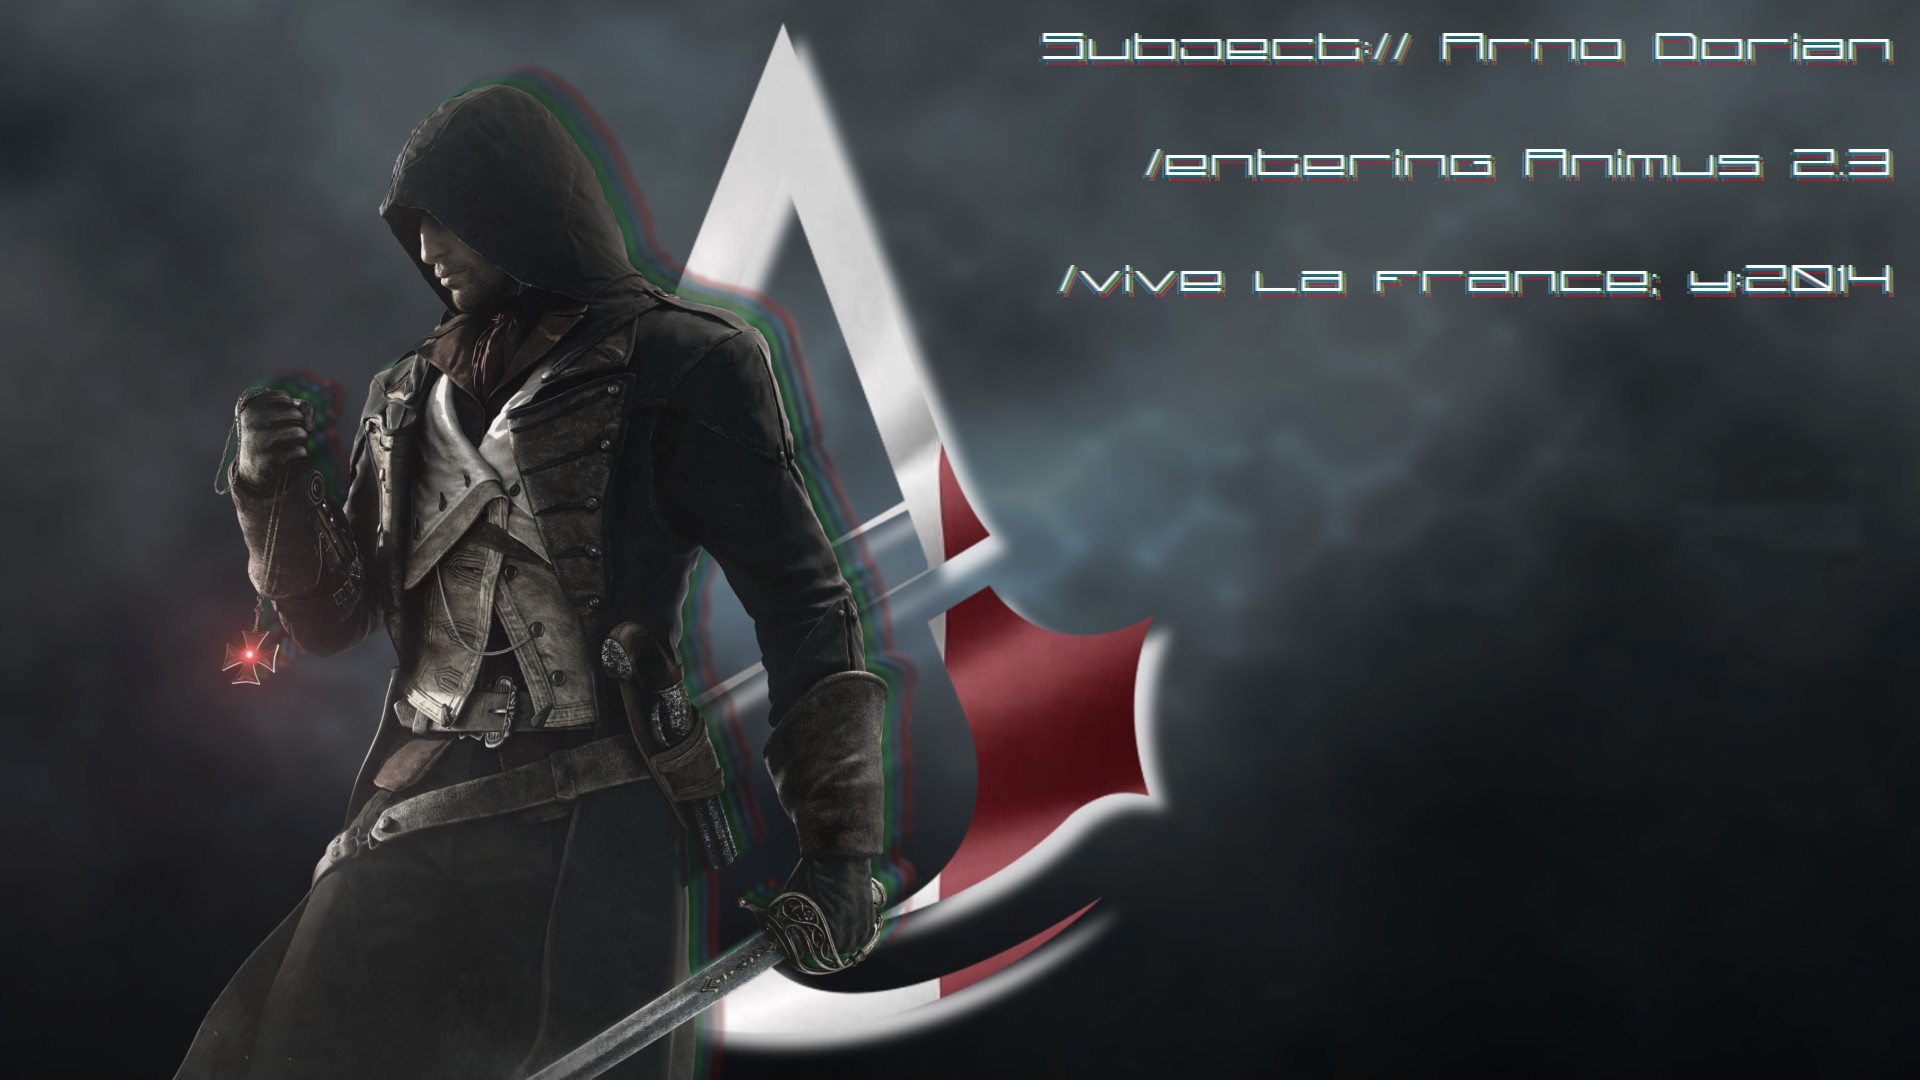 1920x1080 ... Assassin's Creed Wallpaper - Arno Dorian by StramboZ